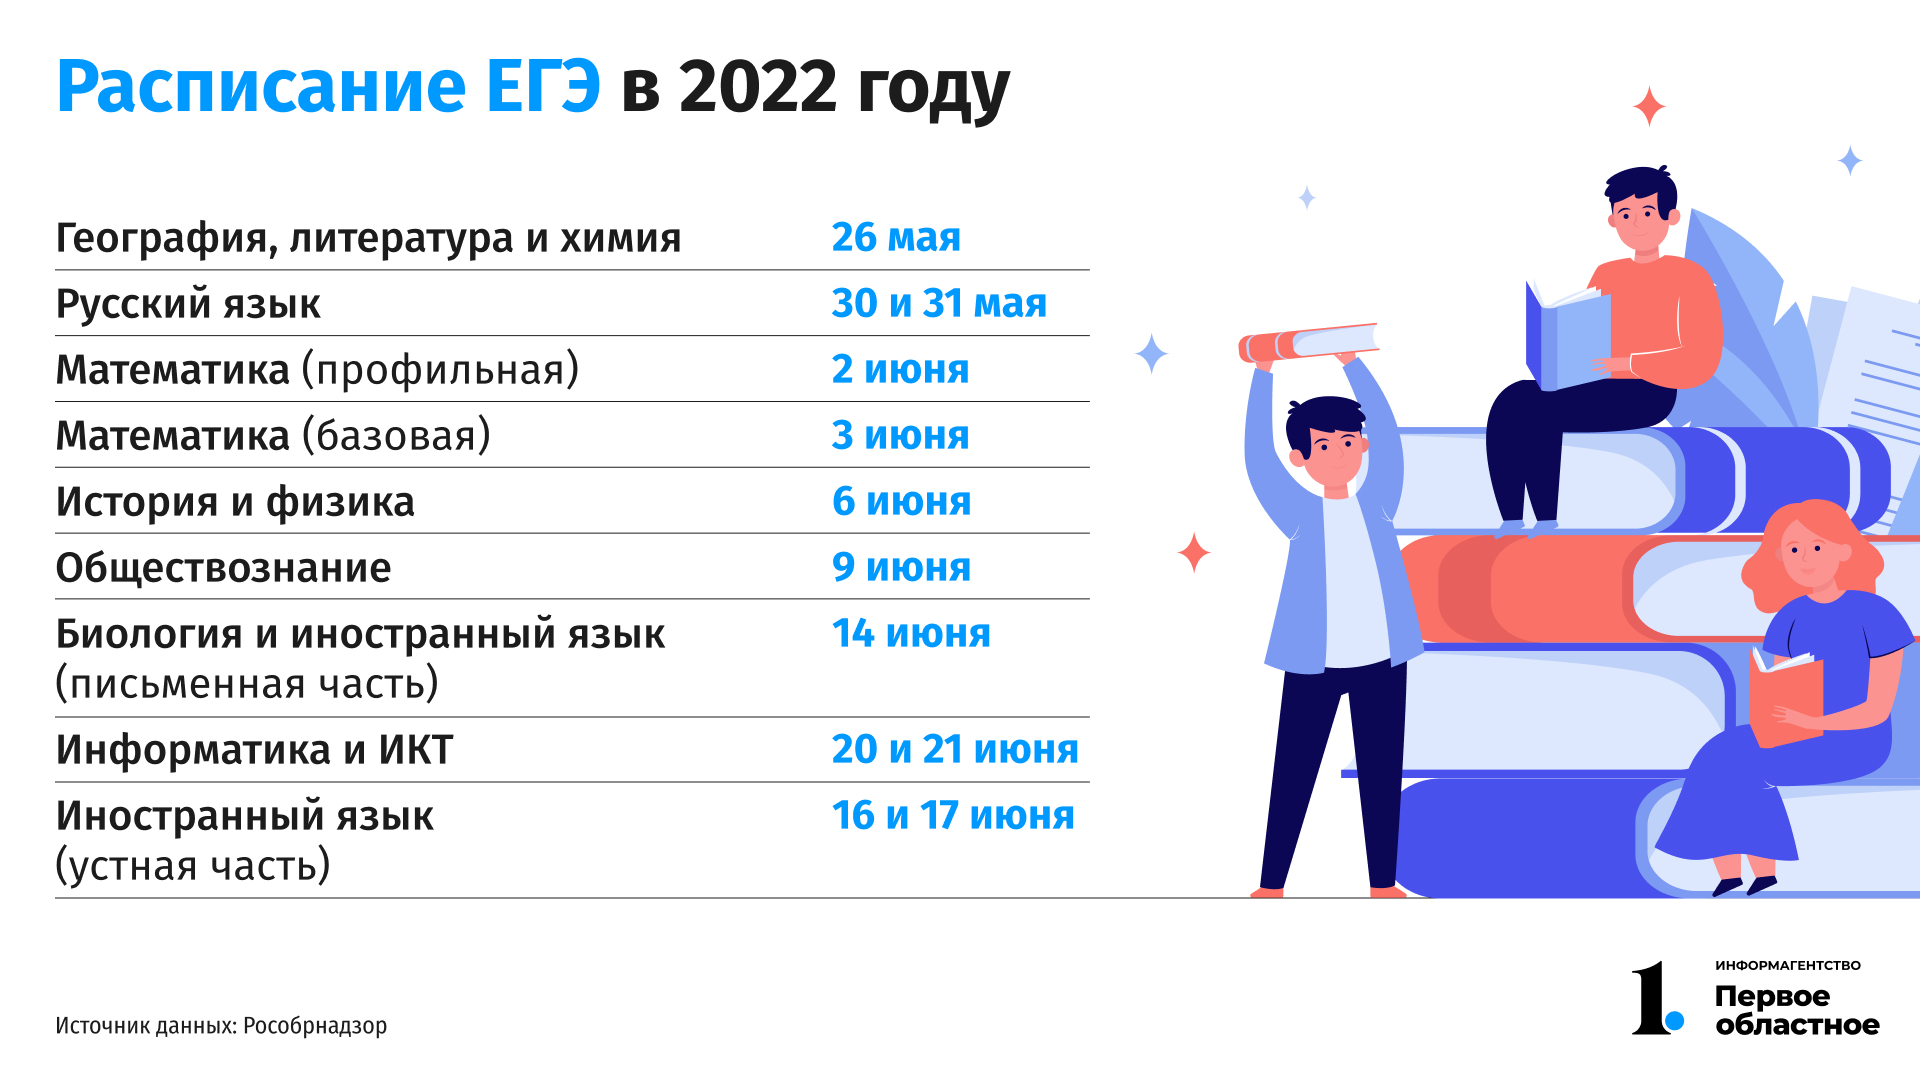 Https edutest obrnadzor gov ru login. ЕГЭ 2022. Расписание ЕГЭ 2022. График ЕГЭ 2022. Расписание ЕГЭ на 2022 год.